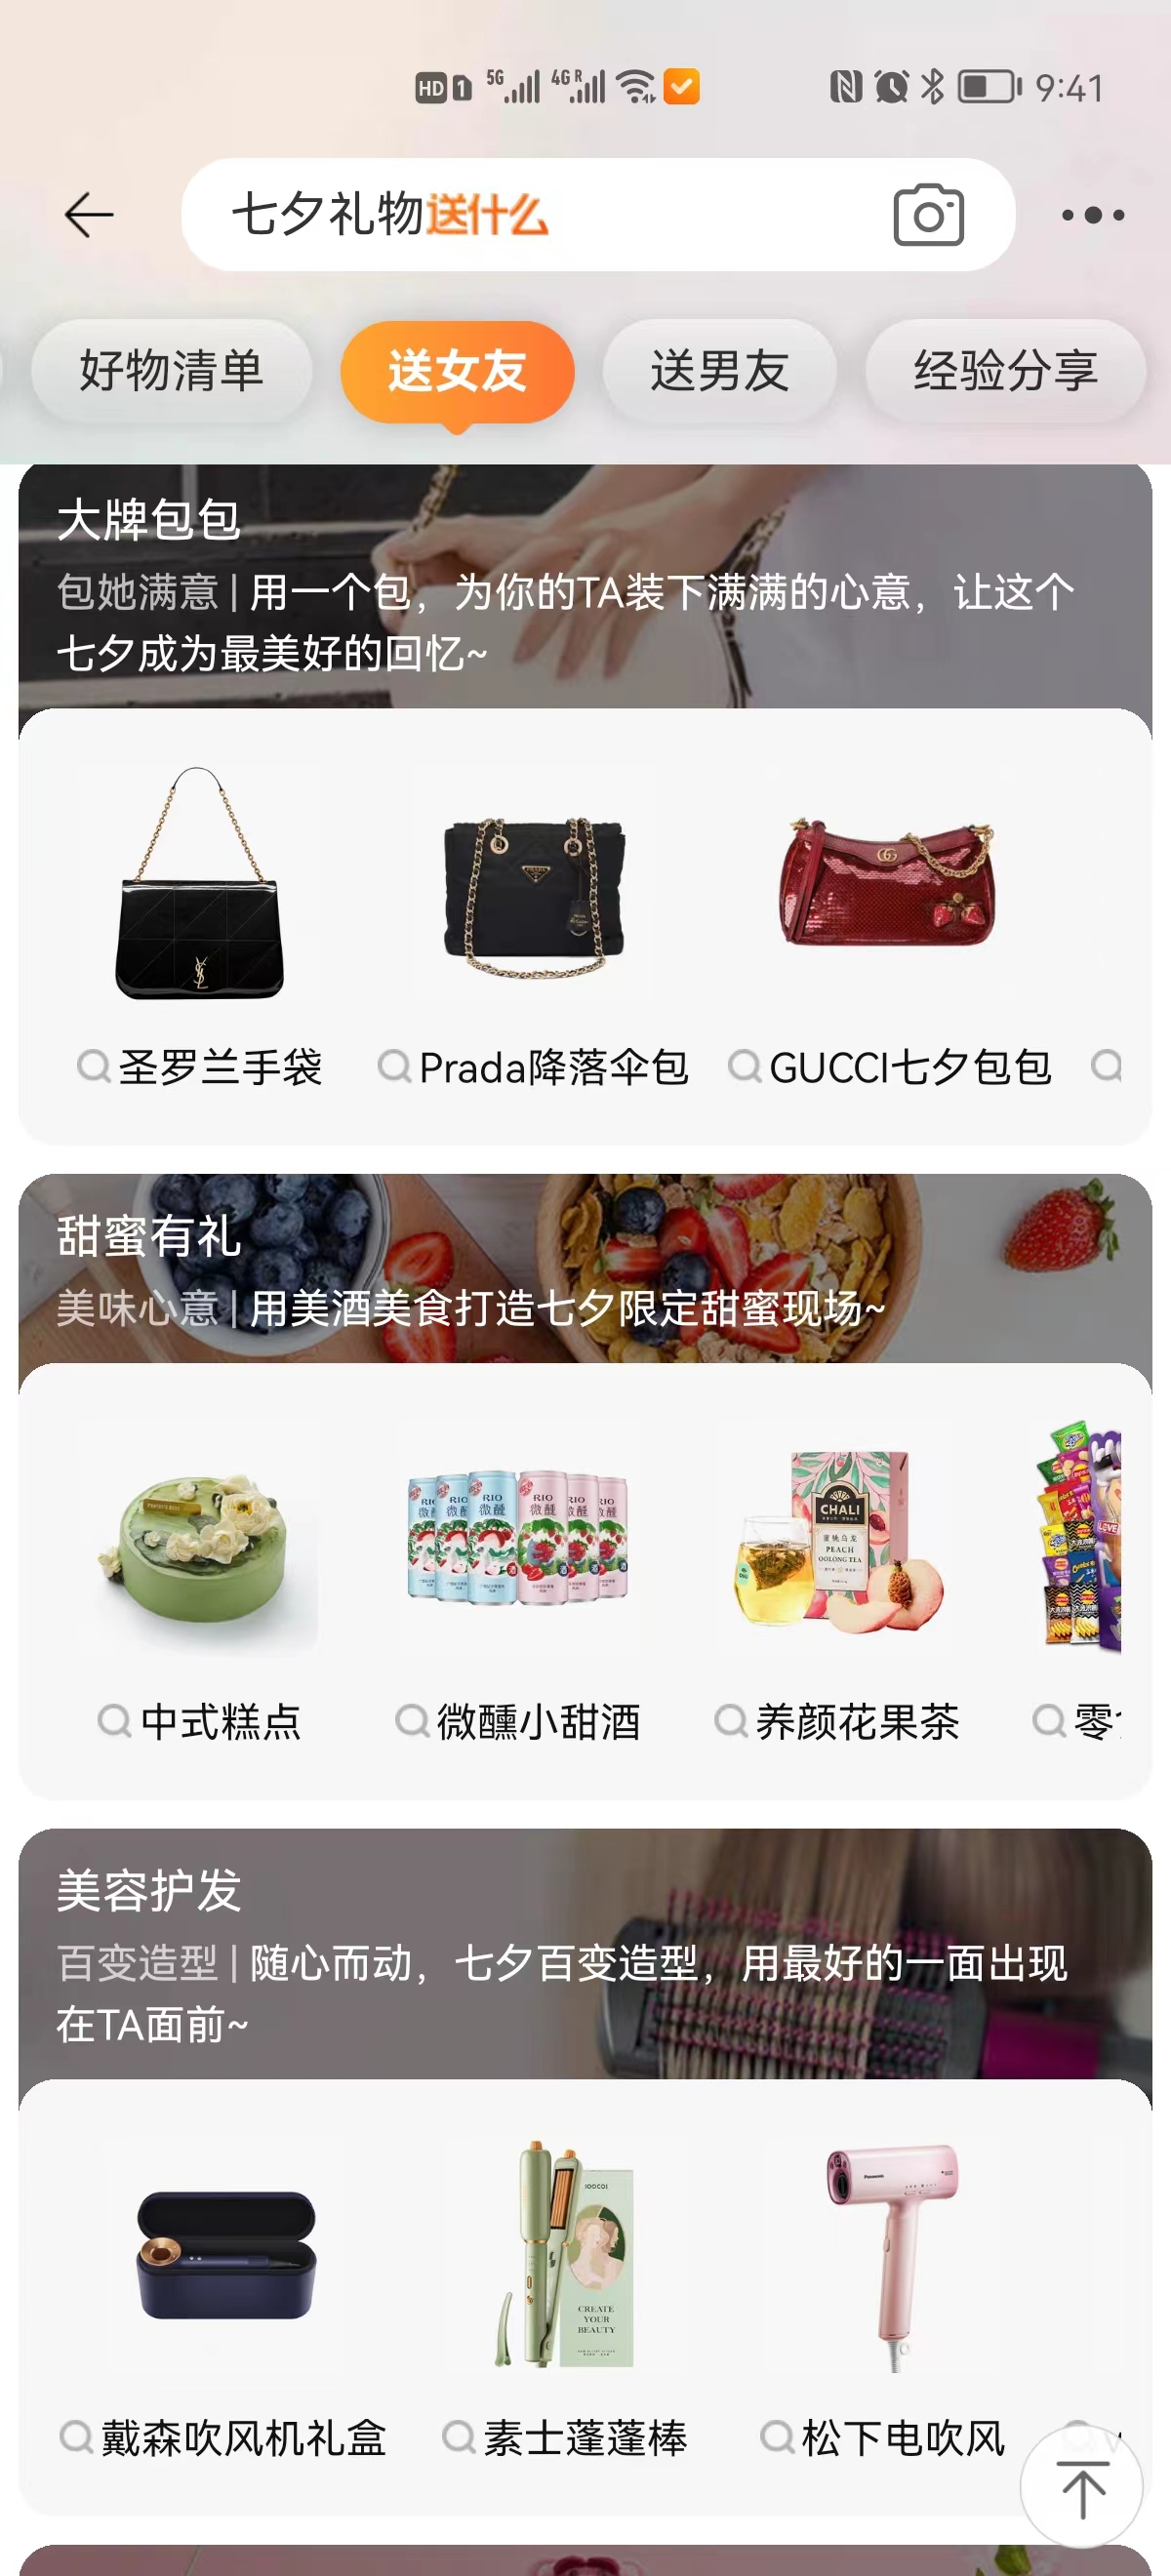 qixi festival recommendation on Taobao.jpg